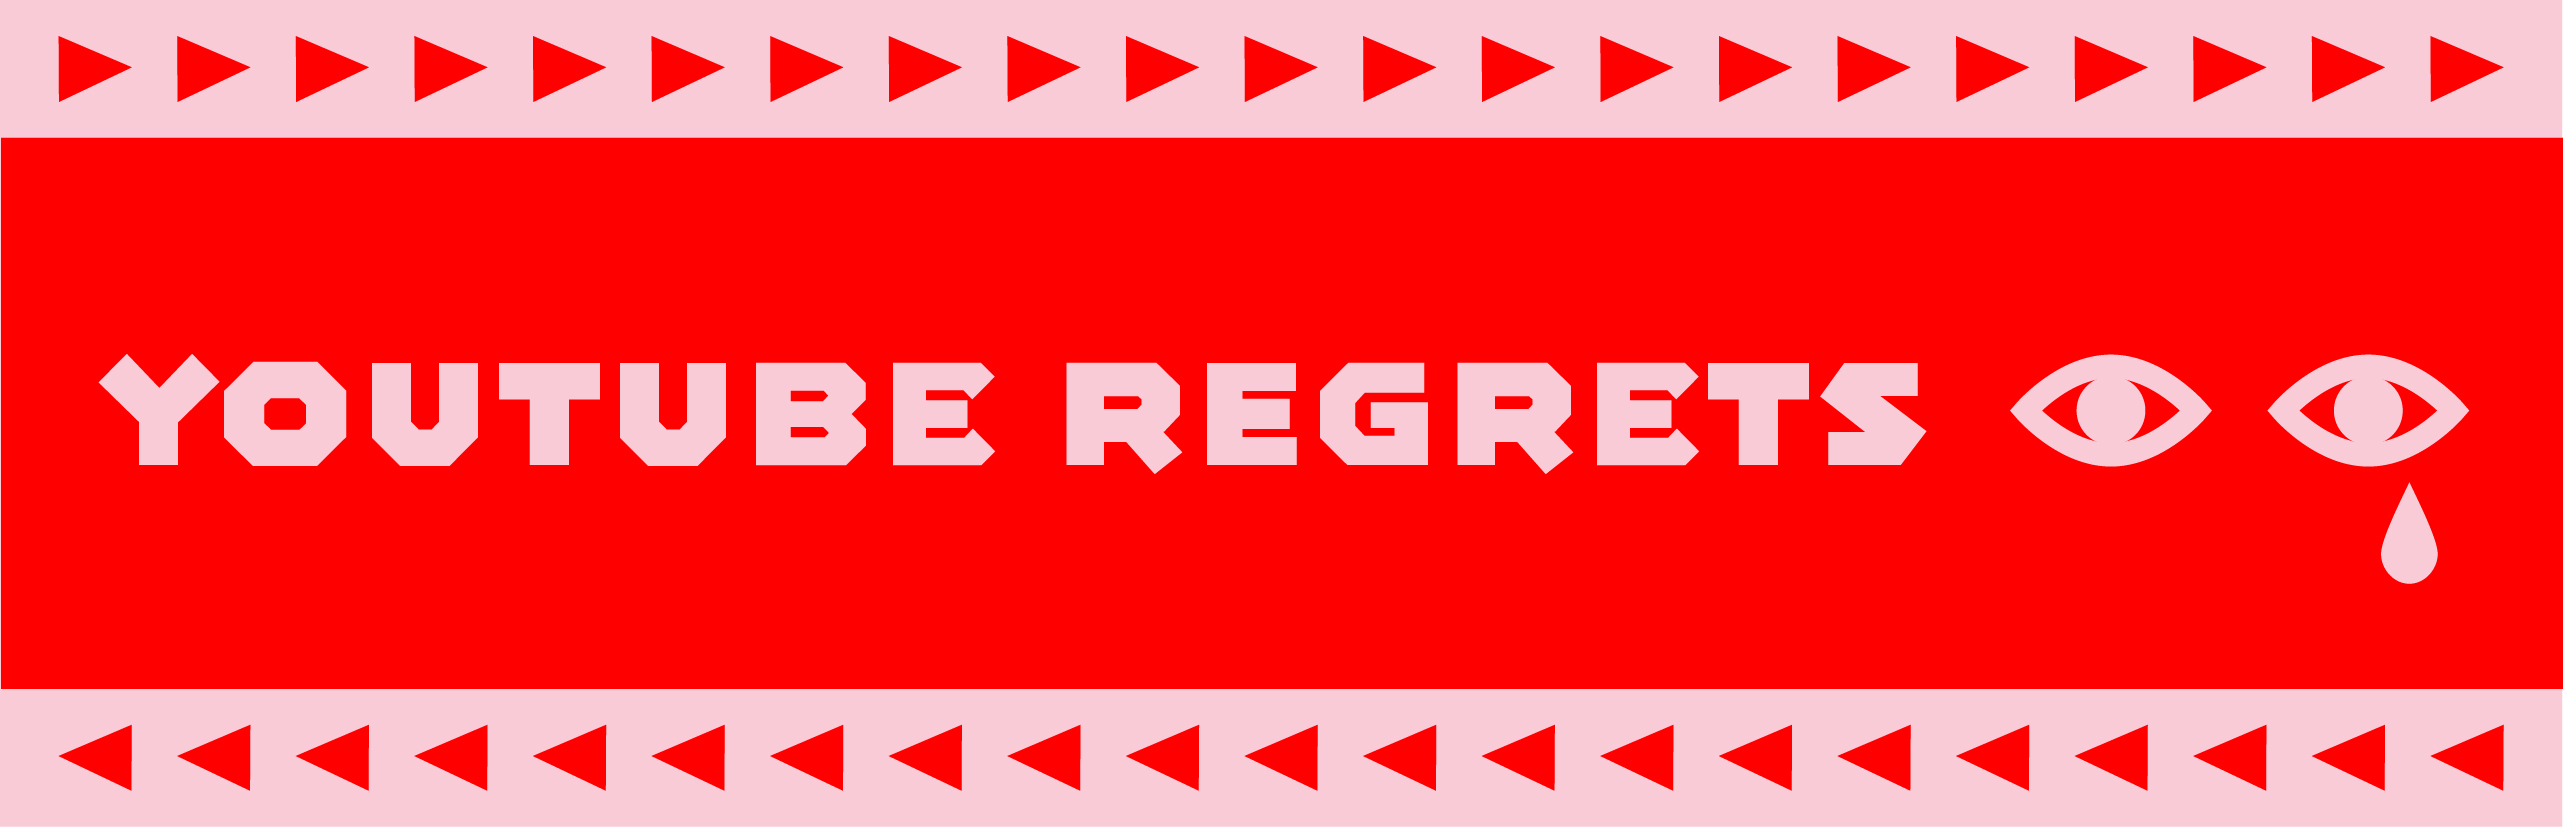 YouTube Regrets